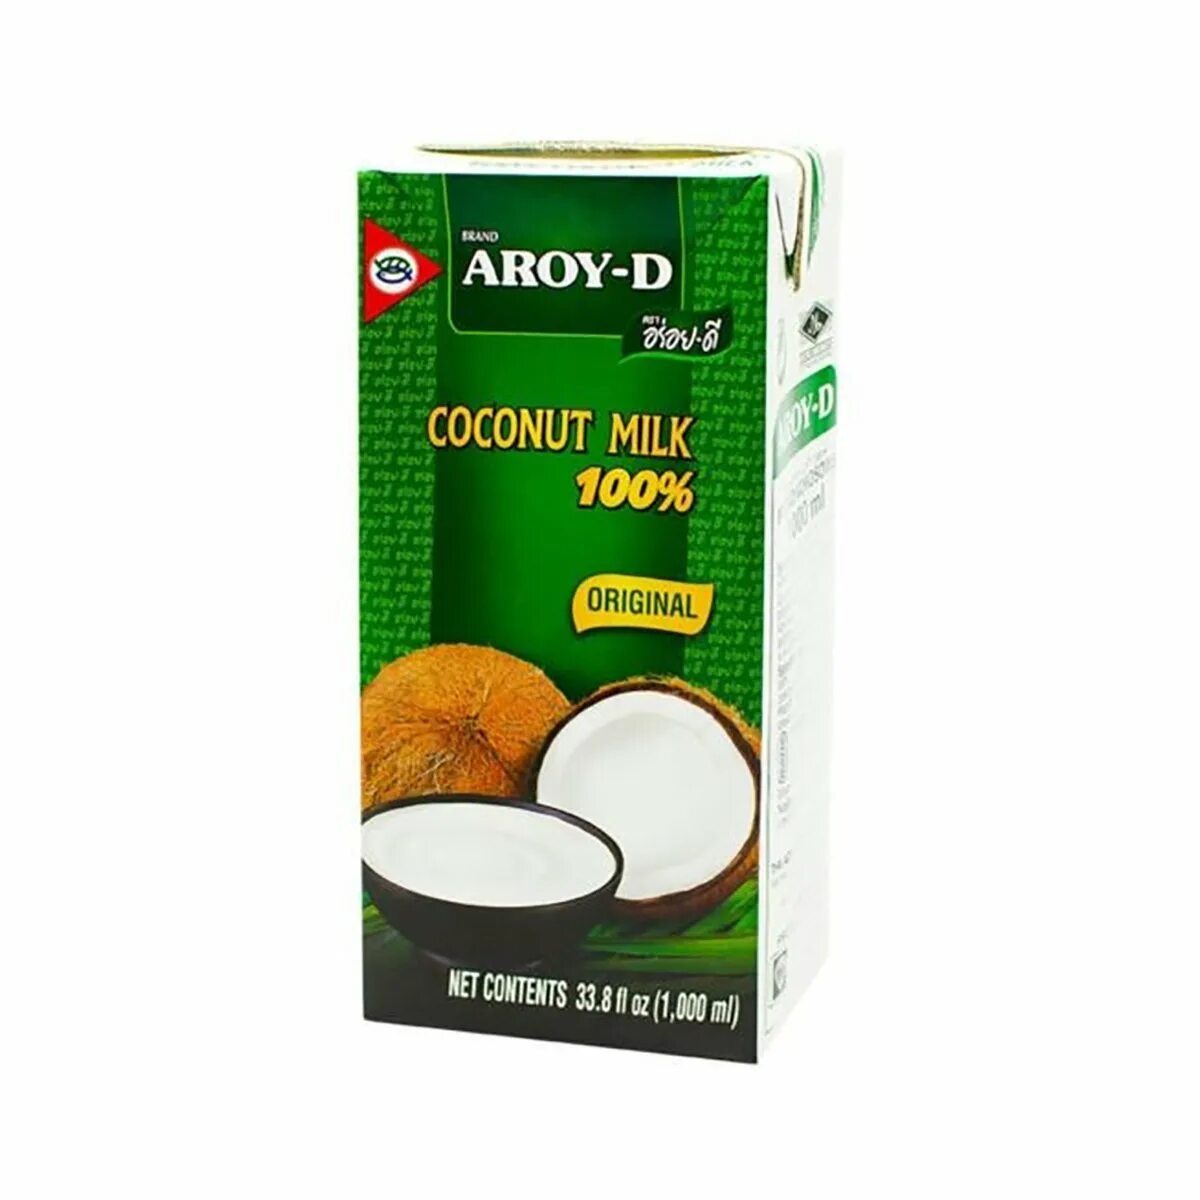 Планто кокосовое молоко. Кокосовое молоко "Aroy-d" 1 л. Кокосовое молоко Aroy-d 1 литр. Молоко Aroy-d кокосовое 60% т/п 1л. Aroy-d кокосовое молоко производитель.